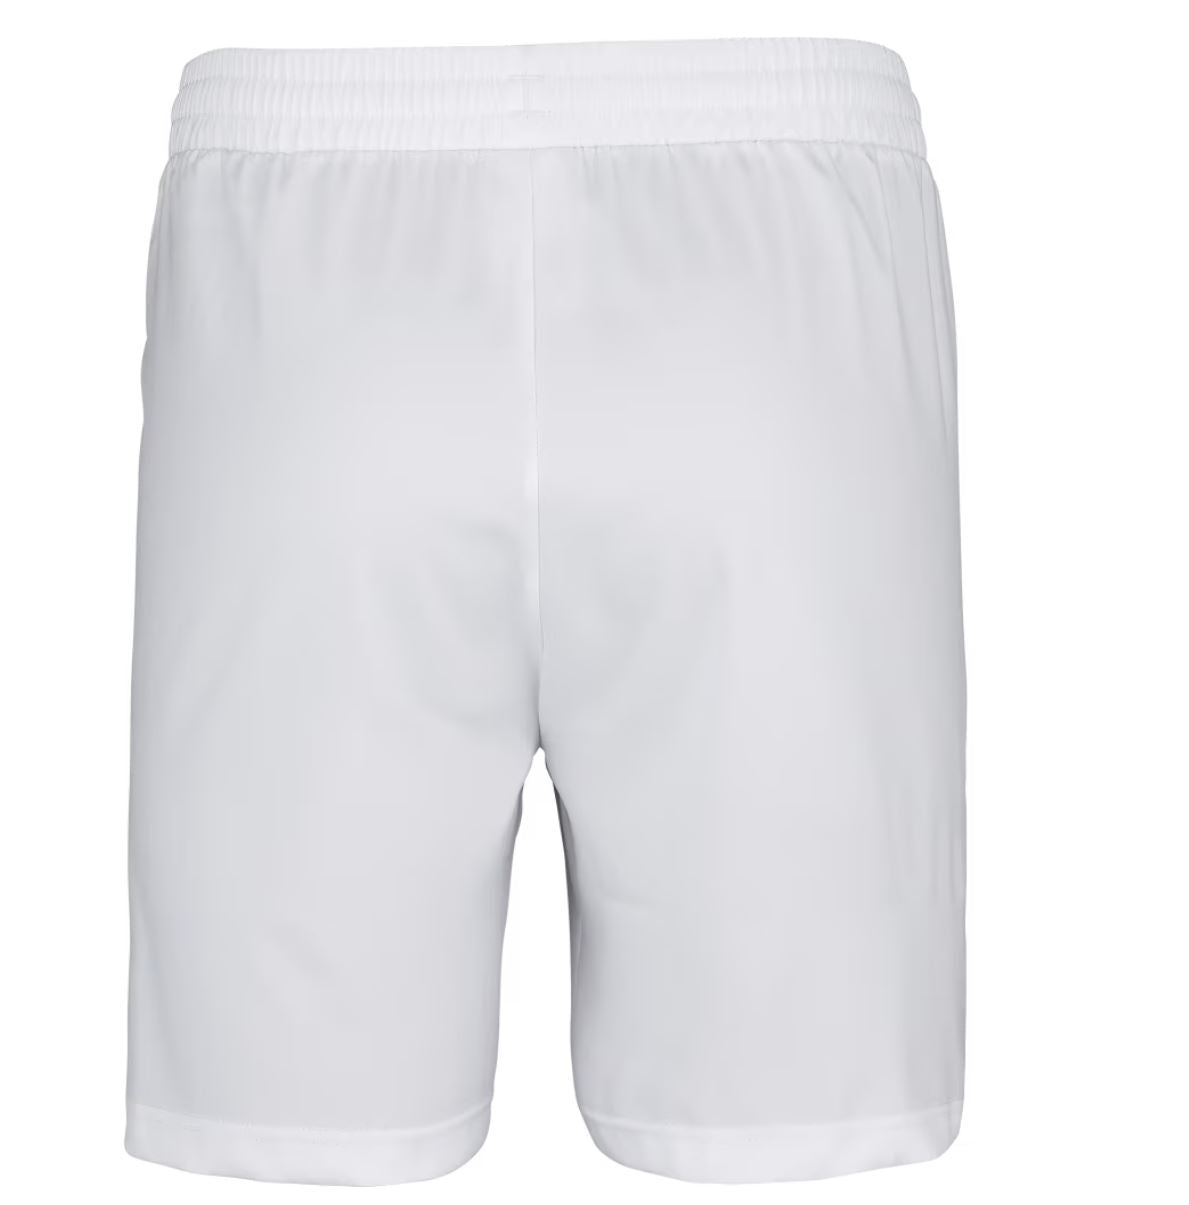 Babolat Shorts Juan Lebron (White/White)